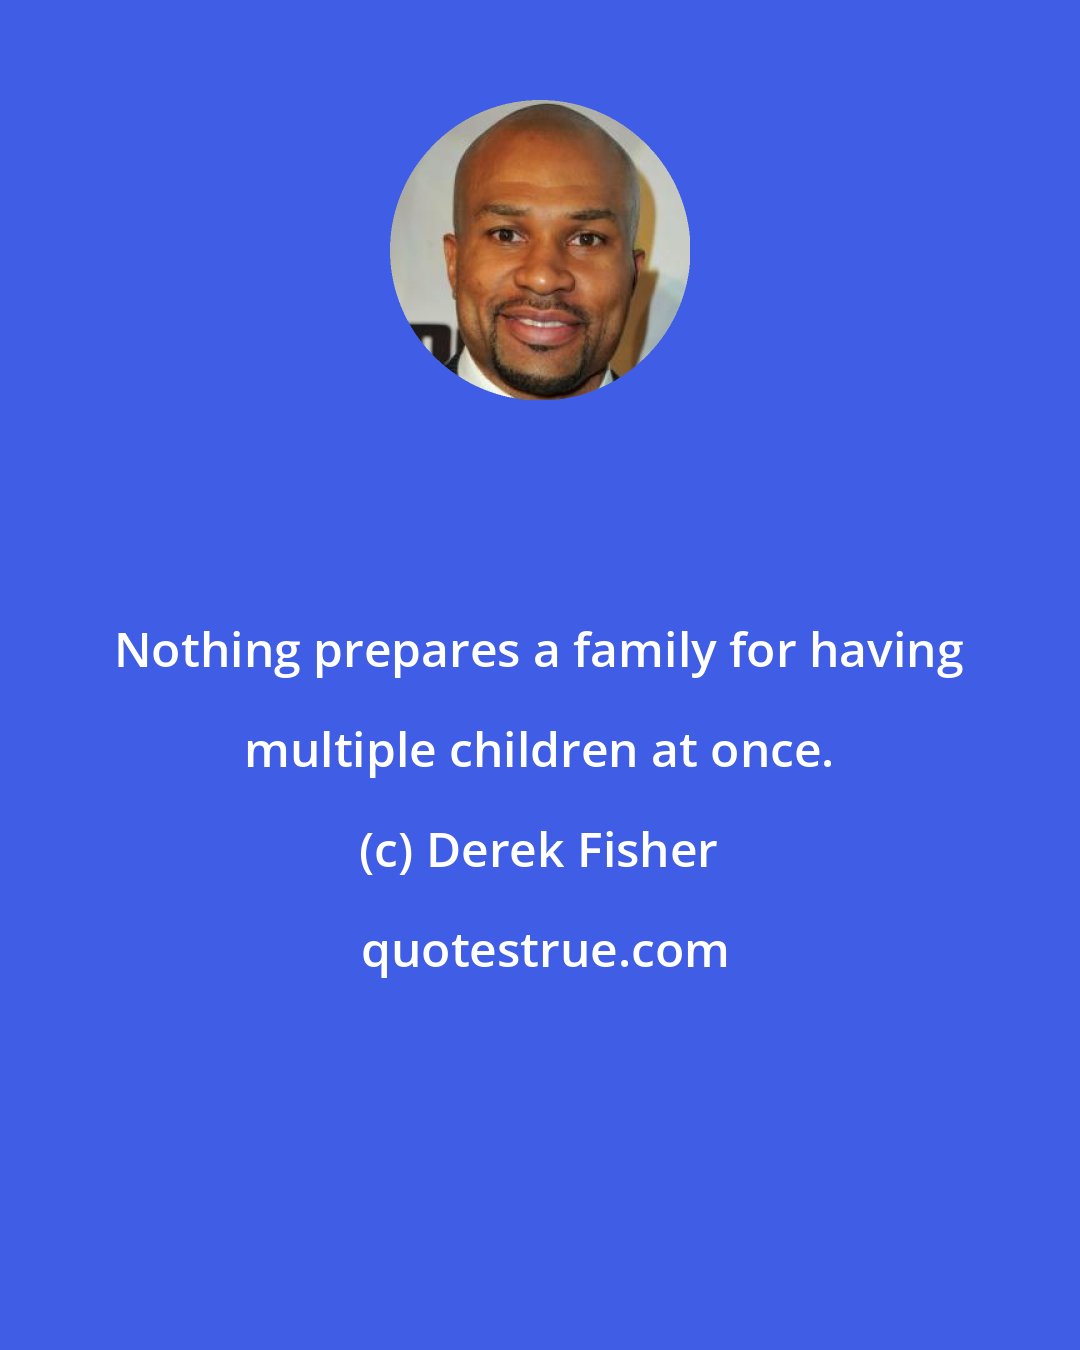 Derek Fisher: Nothing prepares a family for having multiple children at once.